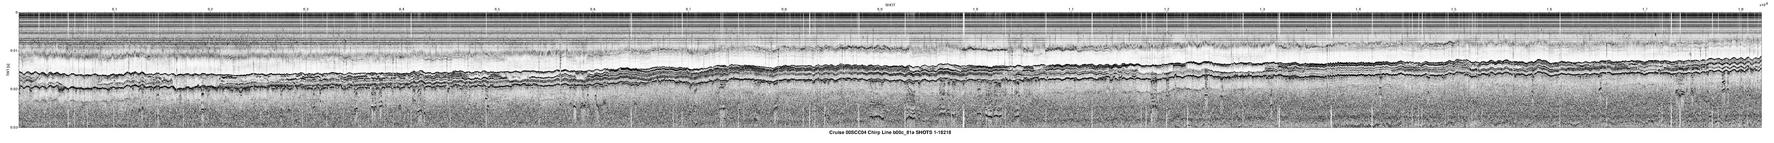 00SCC04 b00c_81a seismic profile image